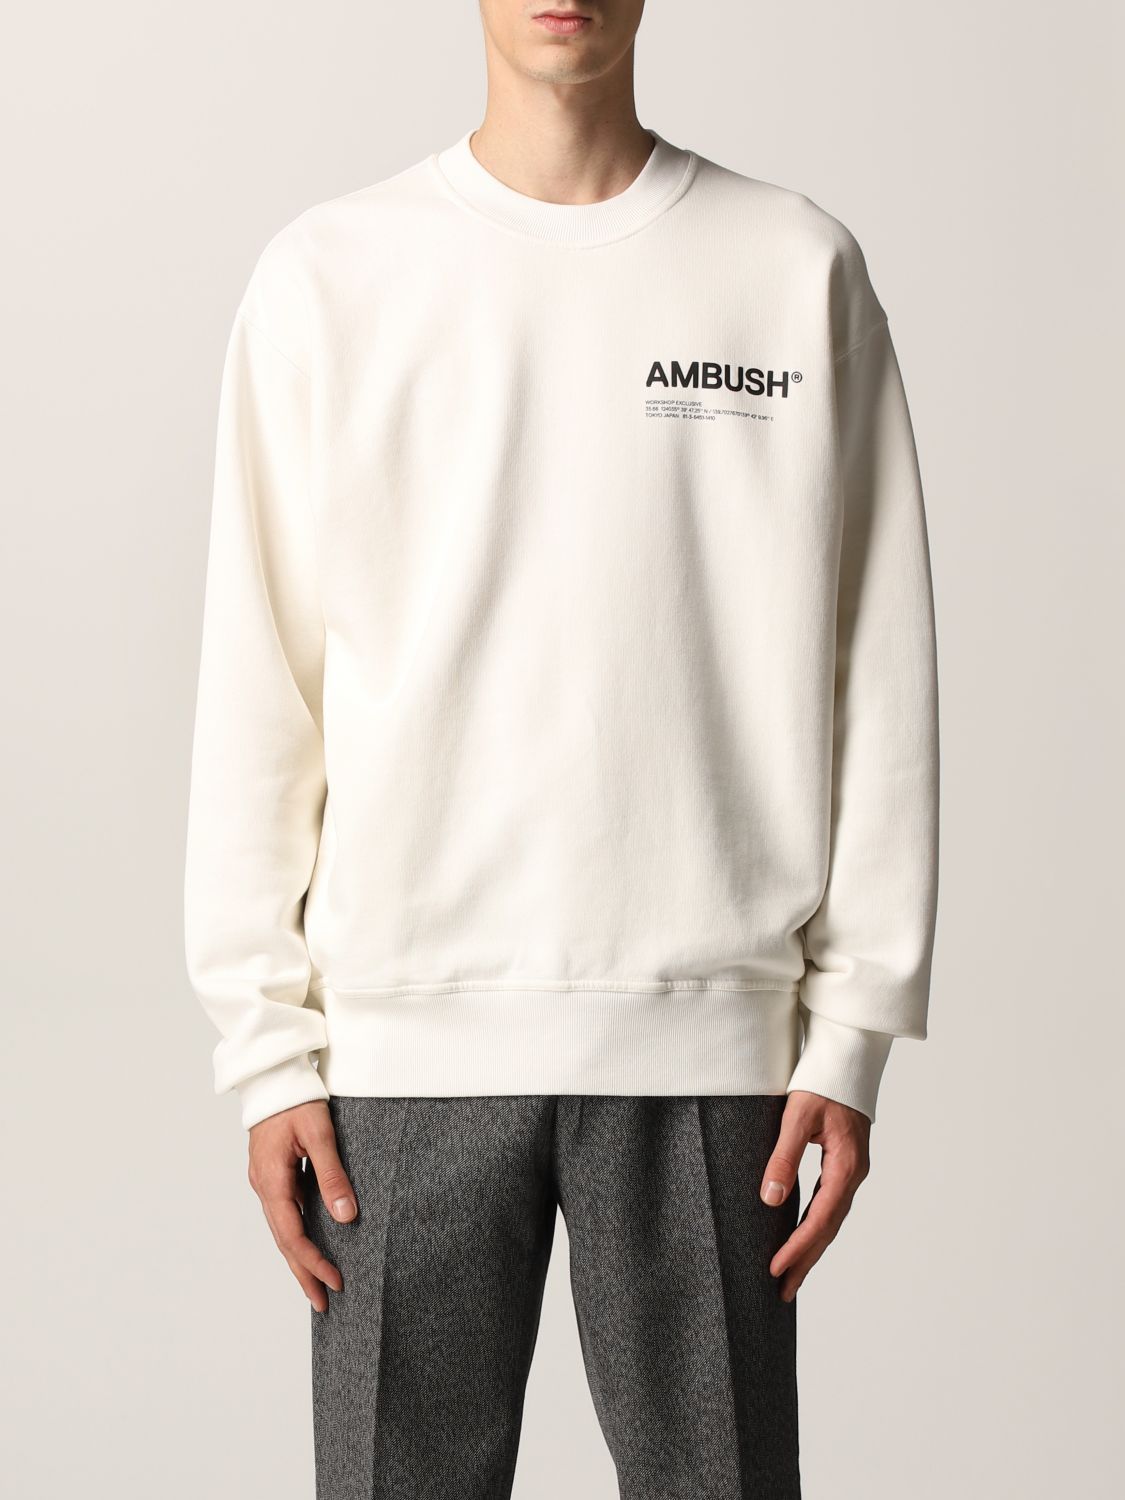 Ambush cotton sweatshirt